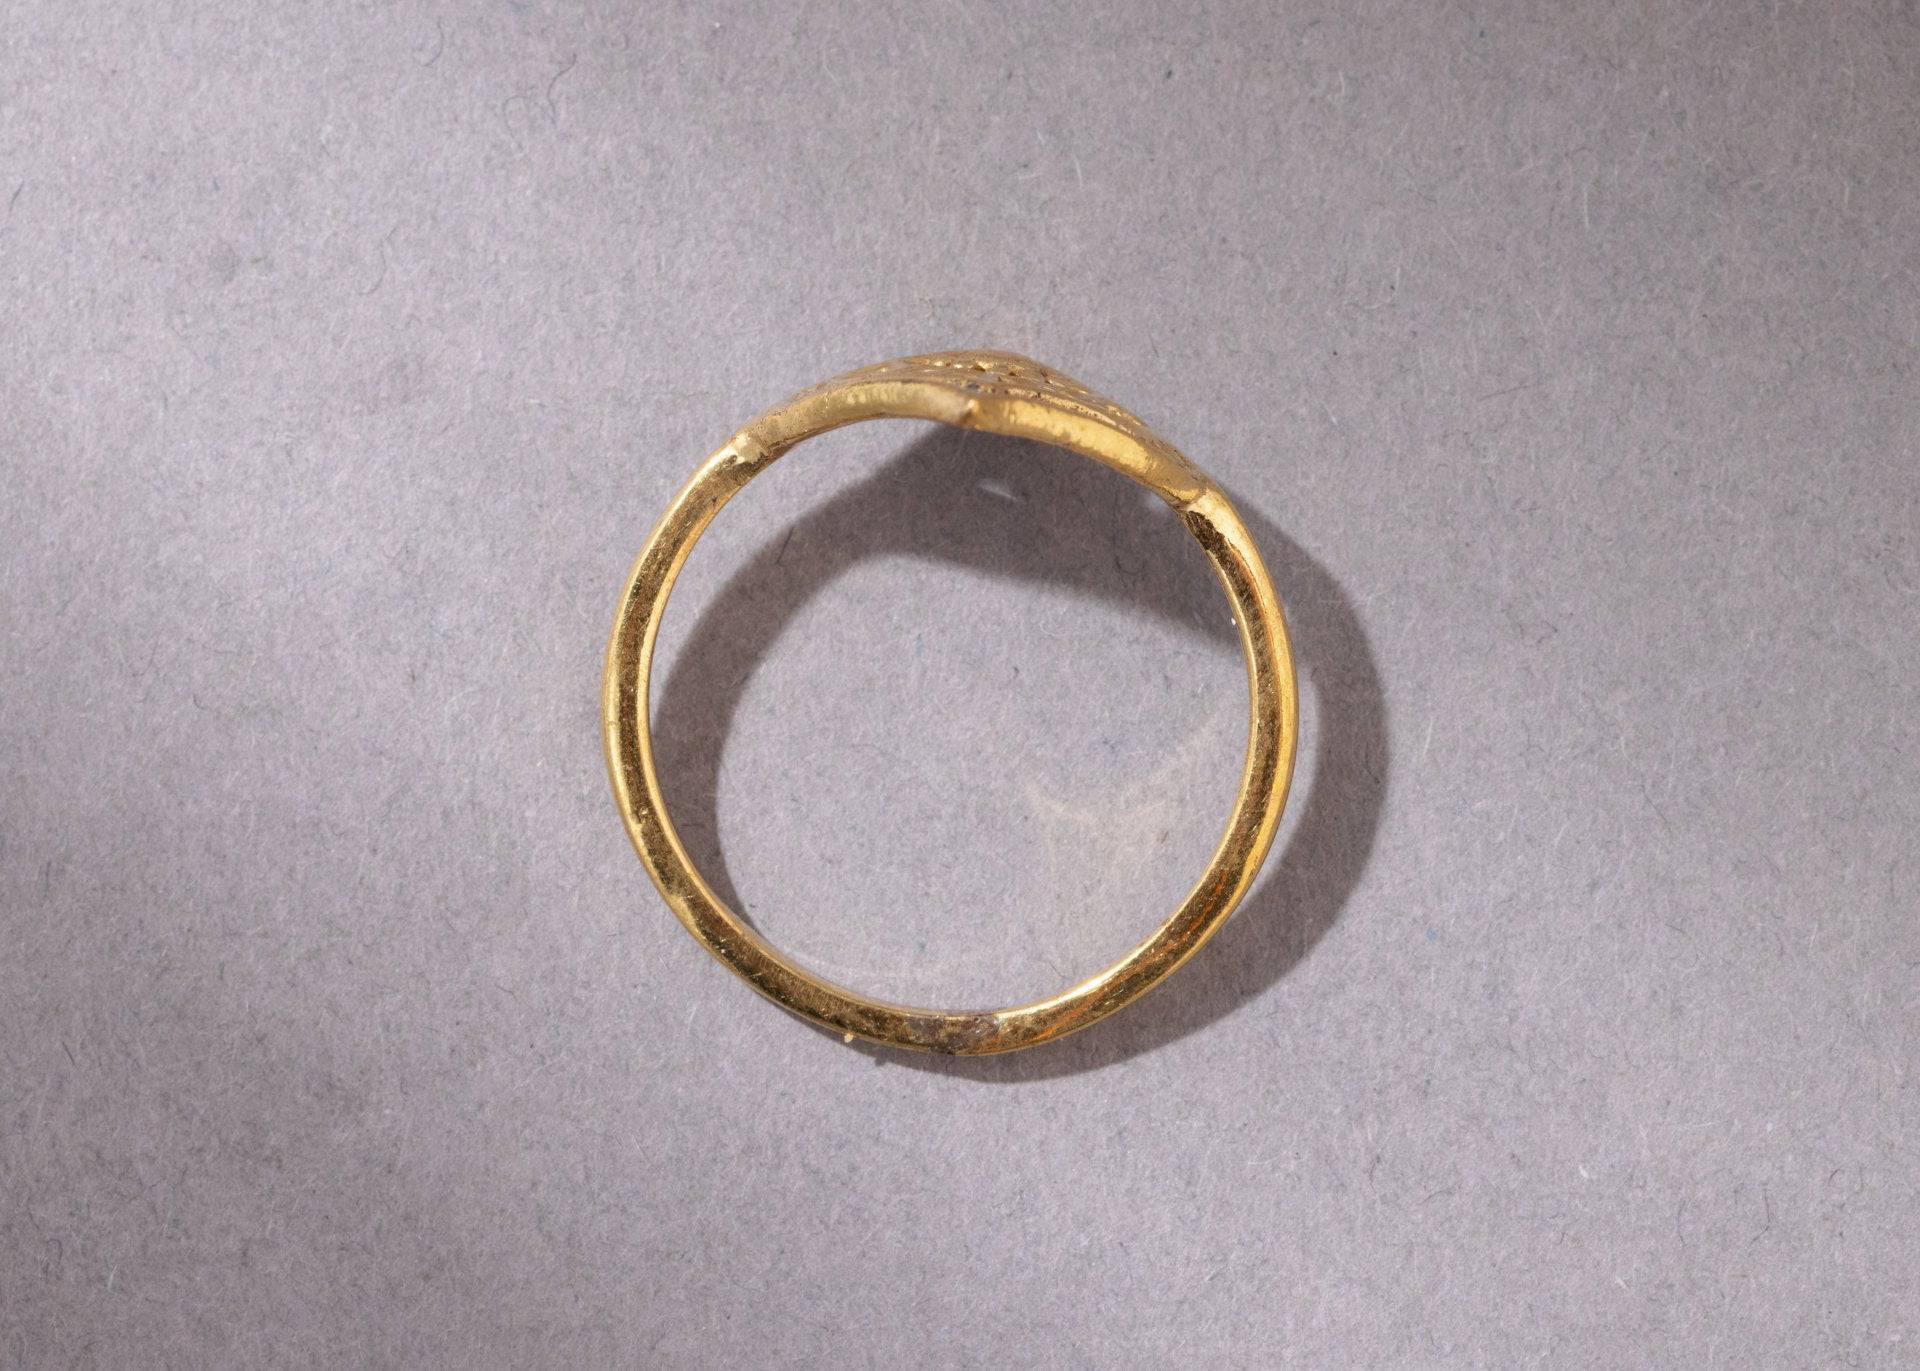 Kronen Boho Ring gold filigran minimalistisch handgemacht - NooeBerlin